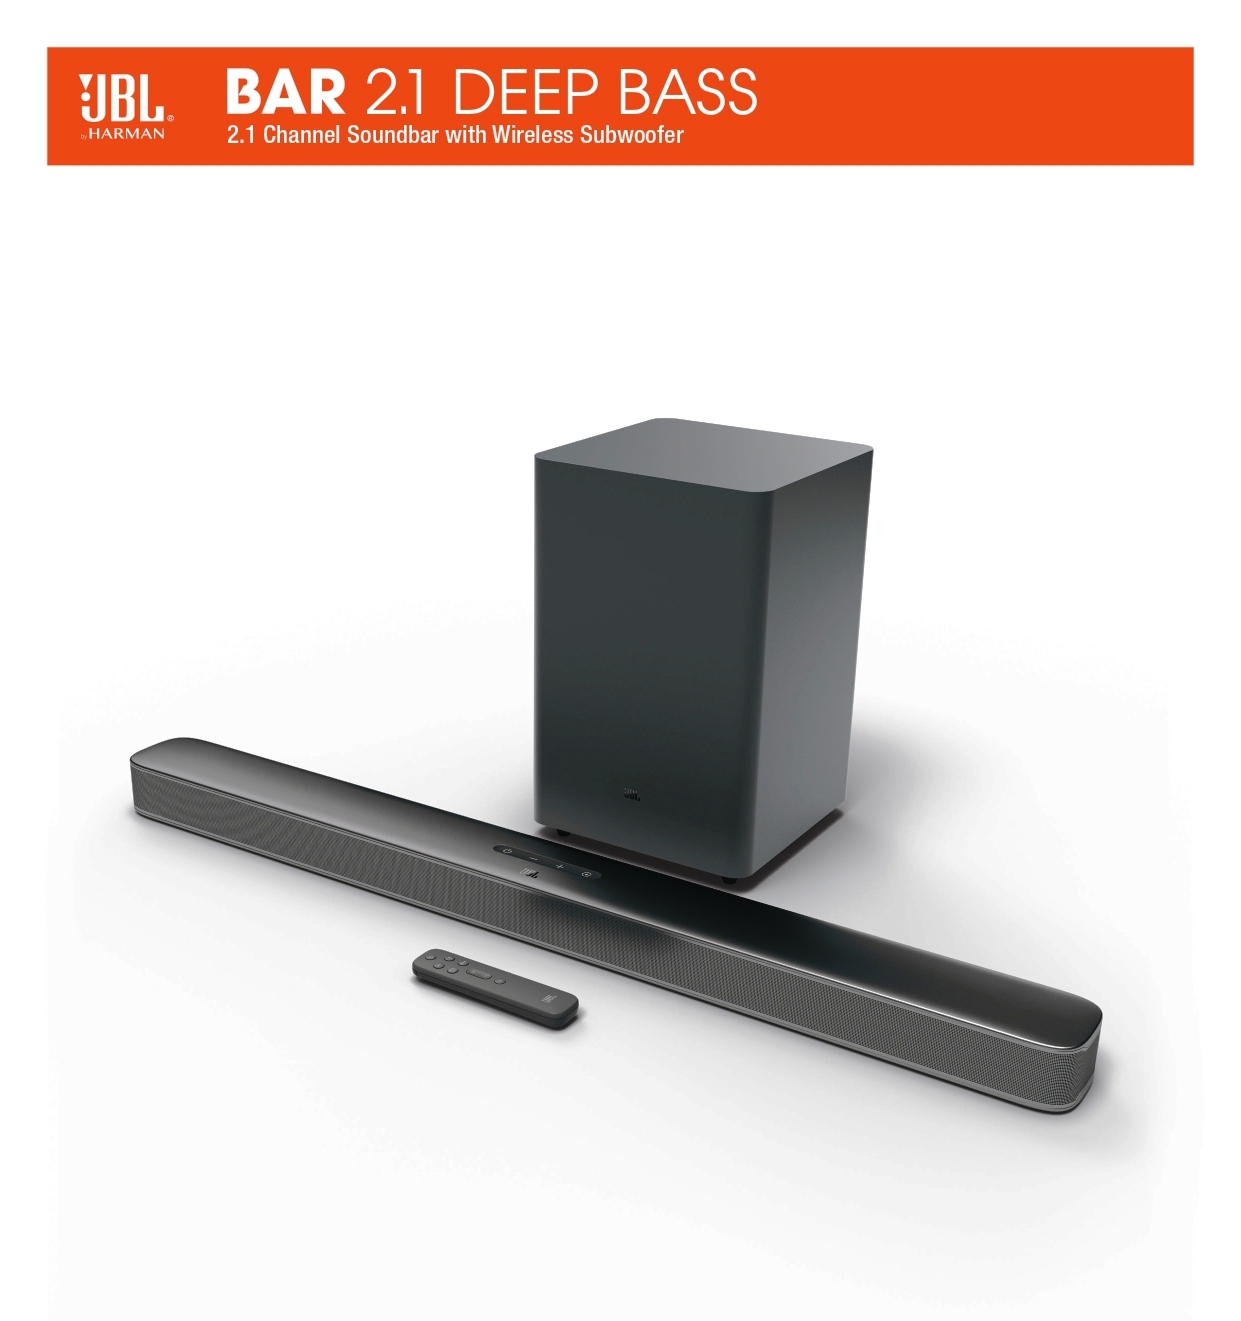 Саундбар bar 2.1 deep bass mk2. Саундбар JBL Bar 2.1. Саундбар JBL Bar 2.1 Deep Bass черный. Саундбар JBL Bar 2.1 черный. JBL Deep 2.1 саундбар.